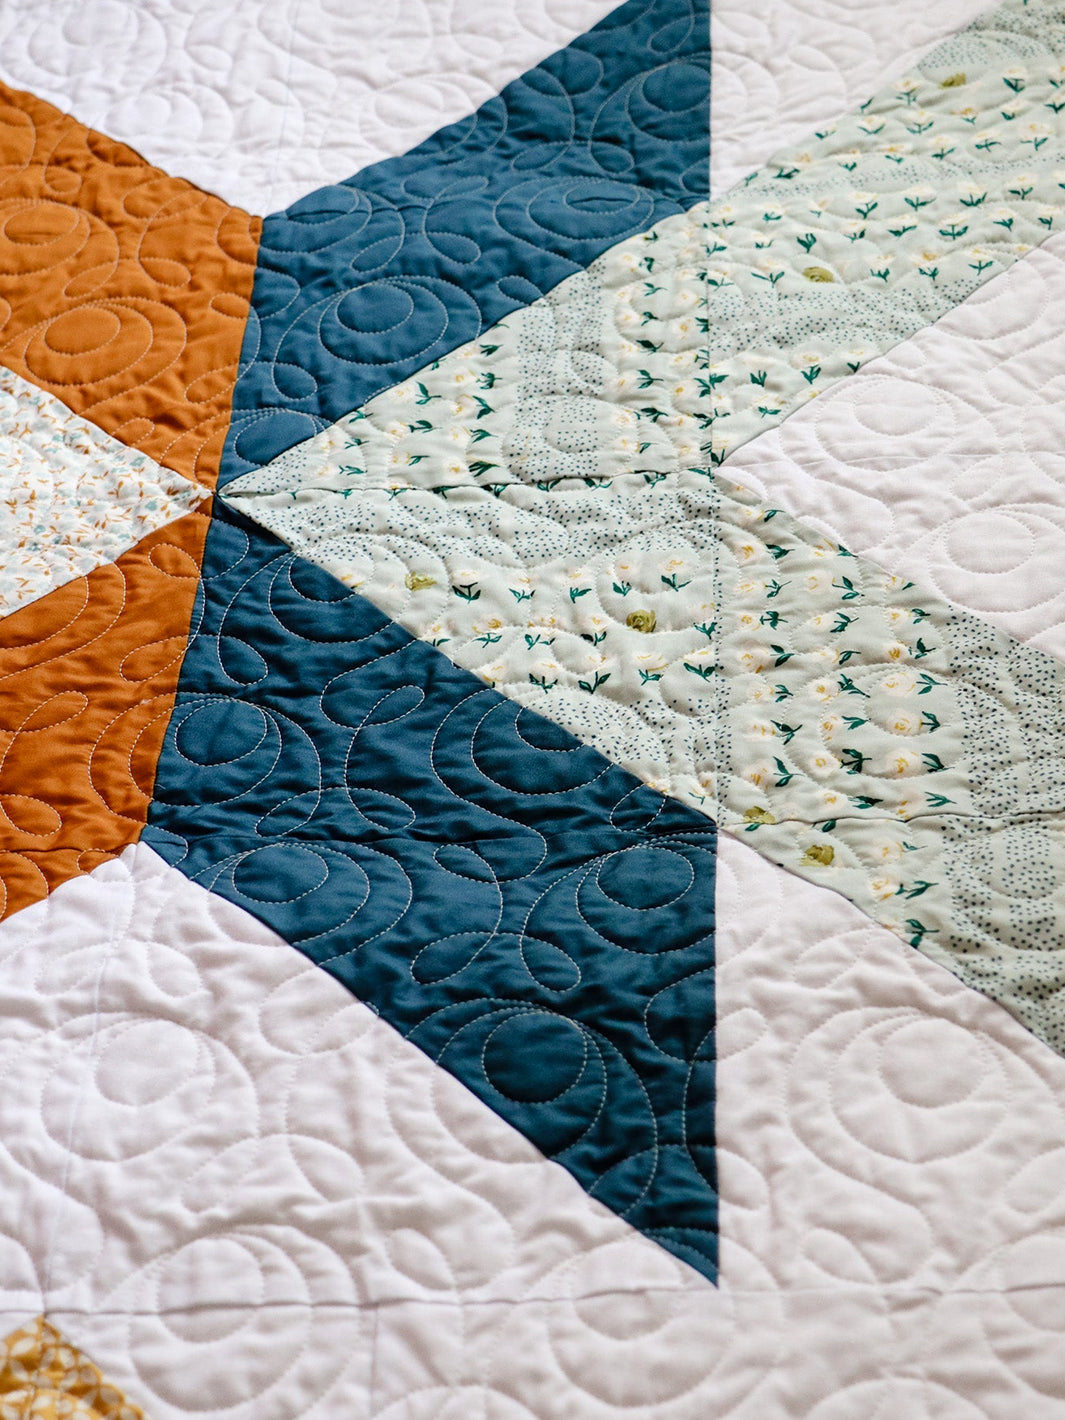 Modern Handmade Baby Quilt - Floral X Pattern #1 Earthly Comfort Home Decor ECH1576-1